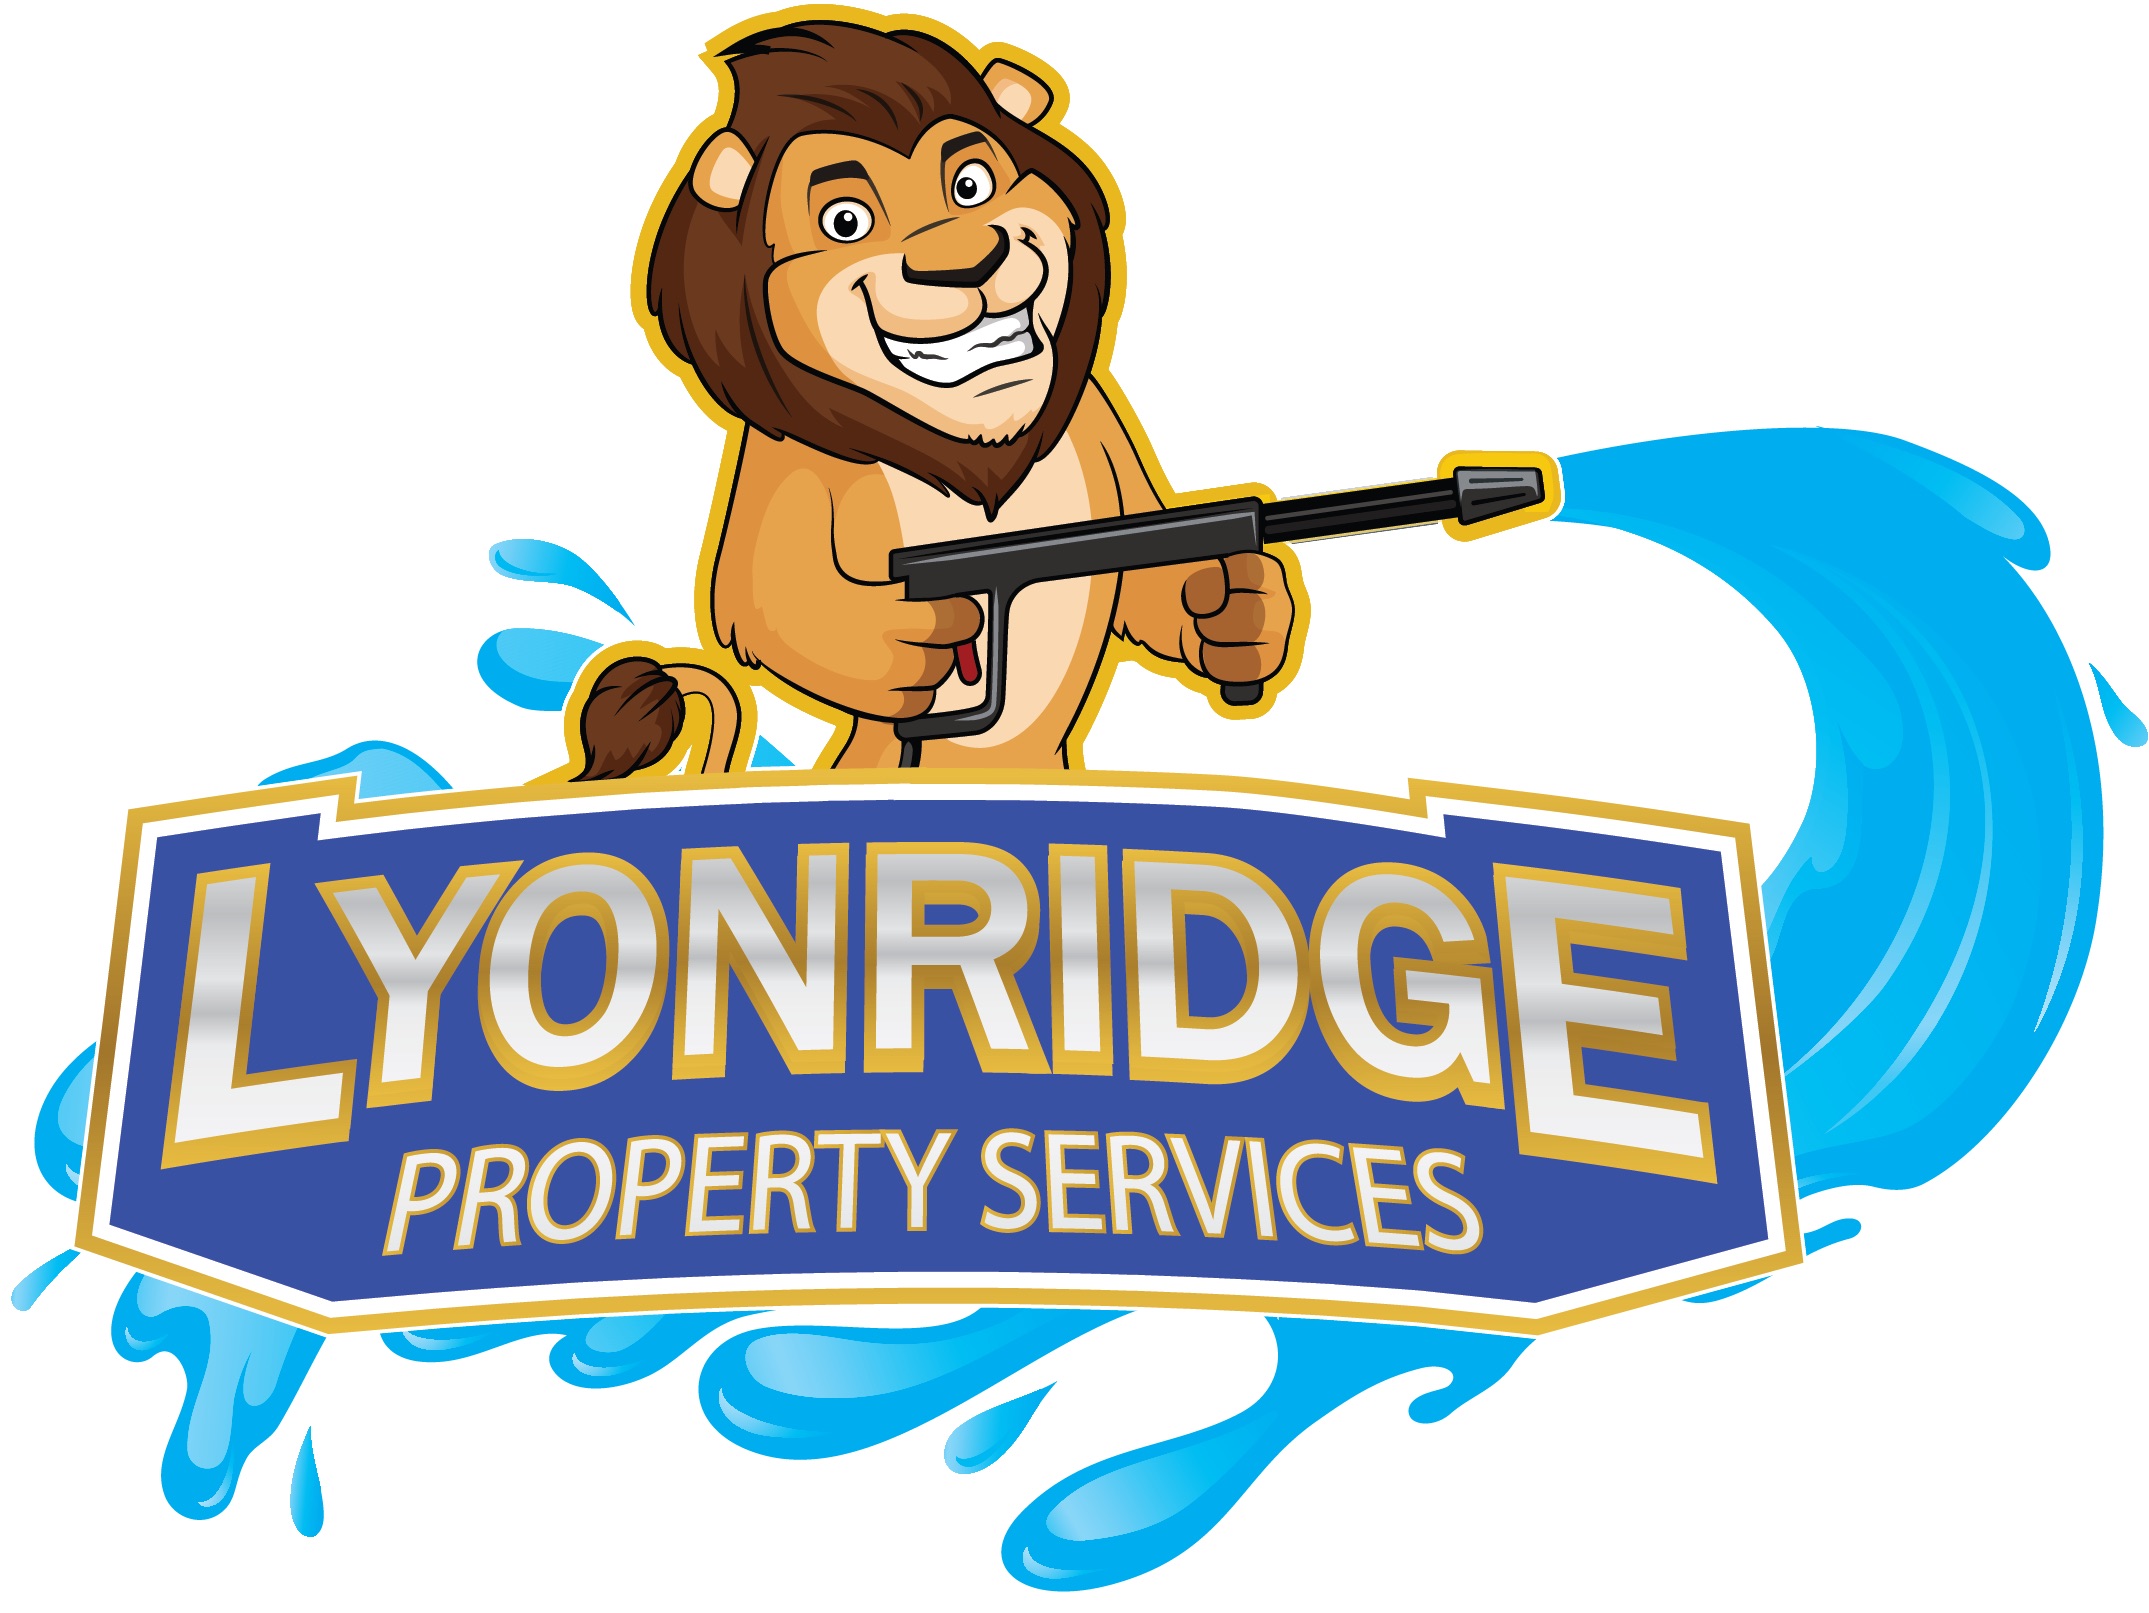 Lyonridge Property Services